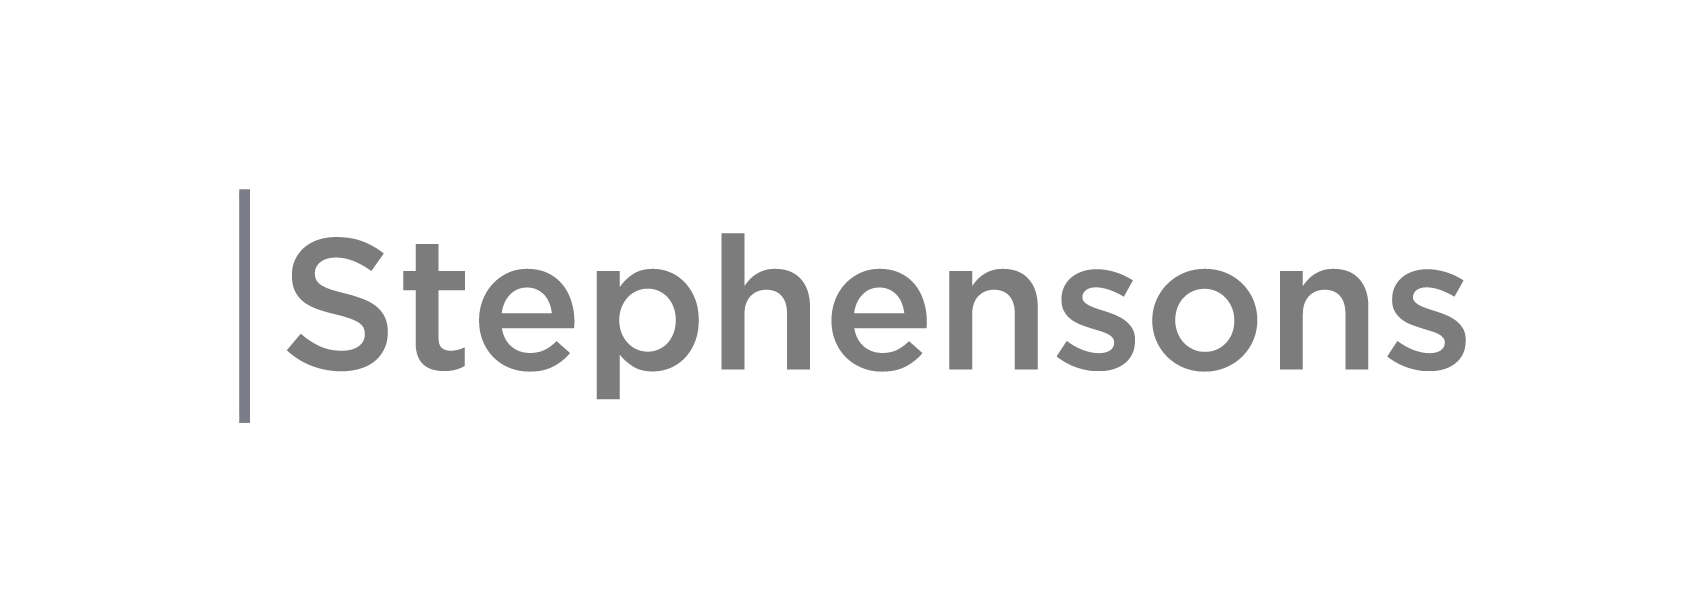 stephensons-logo-8